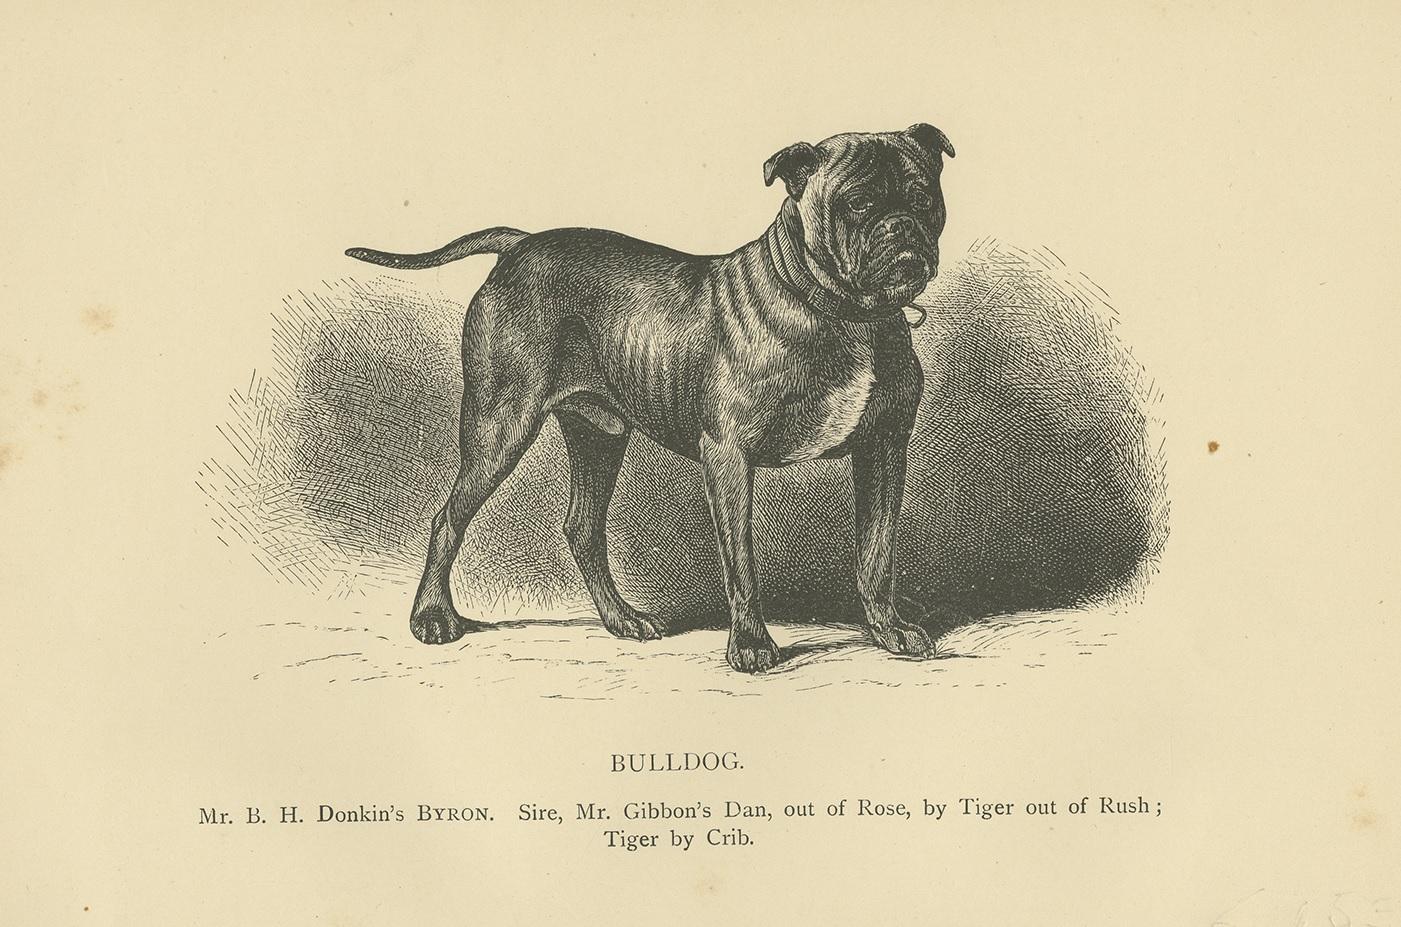 Antique print titled 'Bulldog'. Dog print of a Bulldog. Published circa 1890.